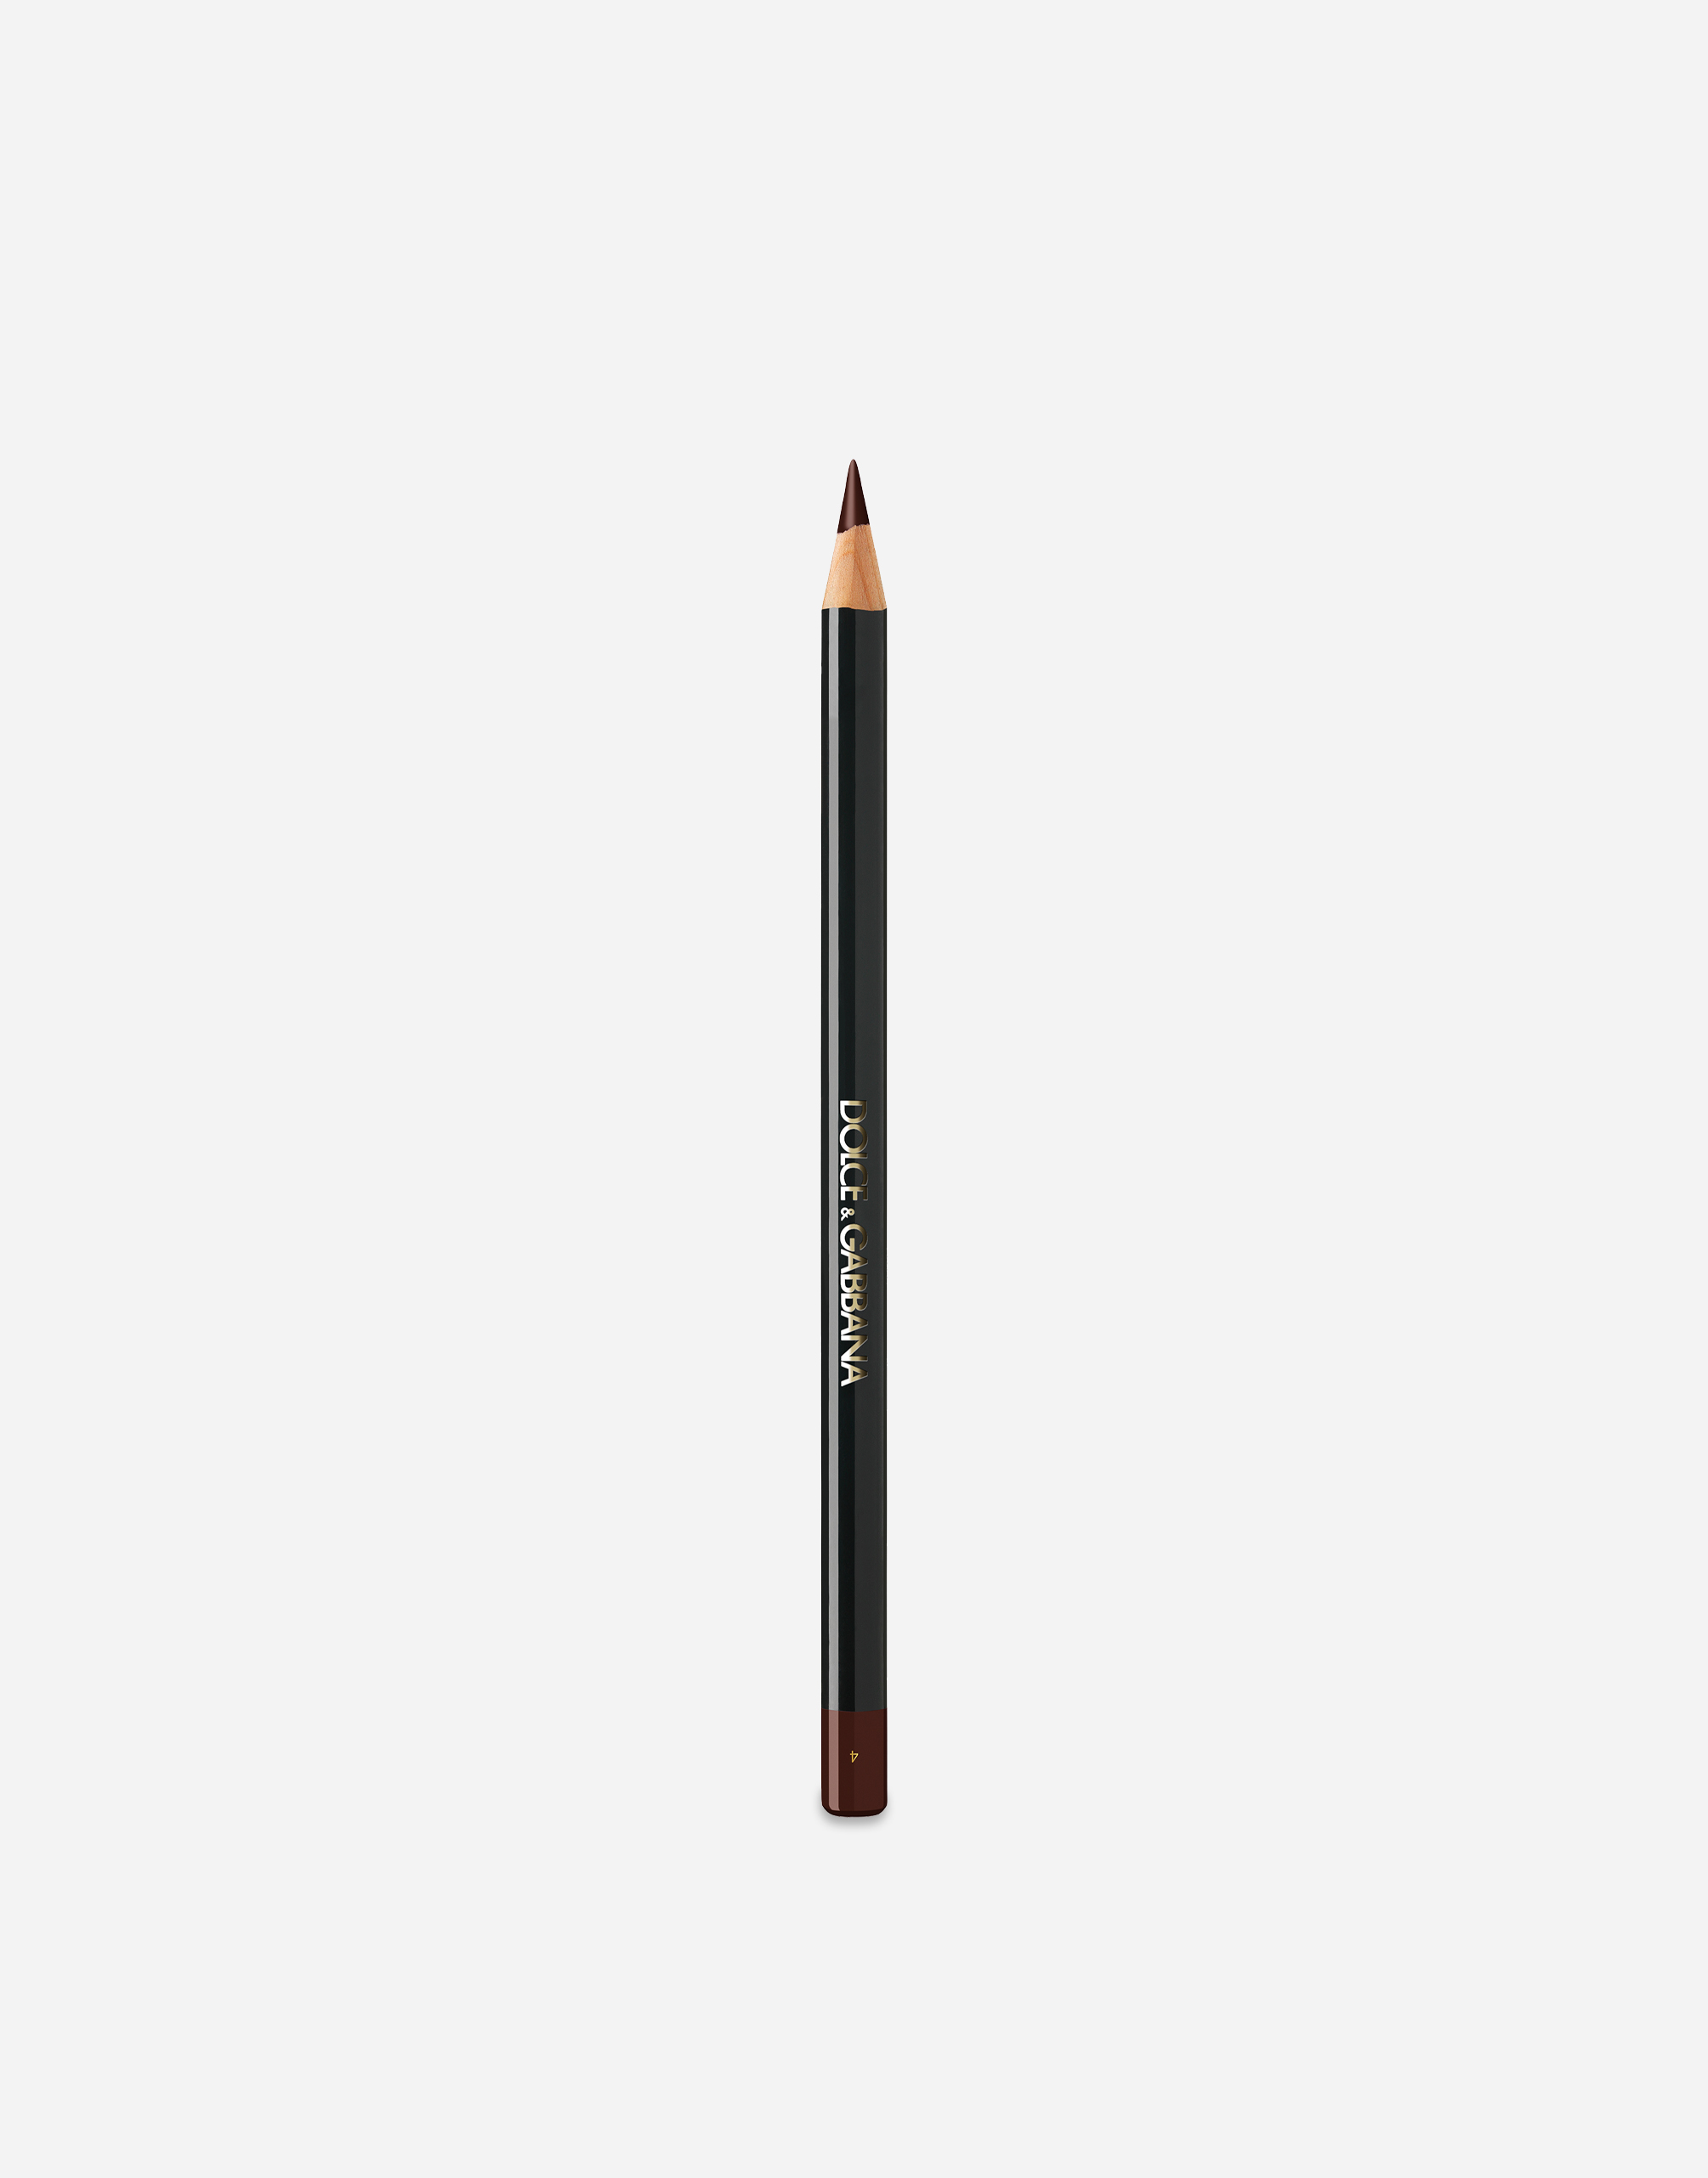 Dolce & Gabbana The Khol Pencil In Chocolate 4